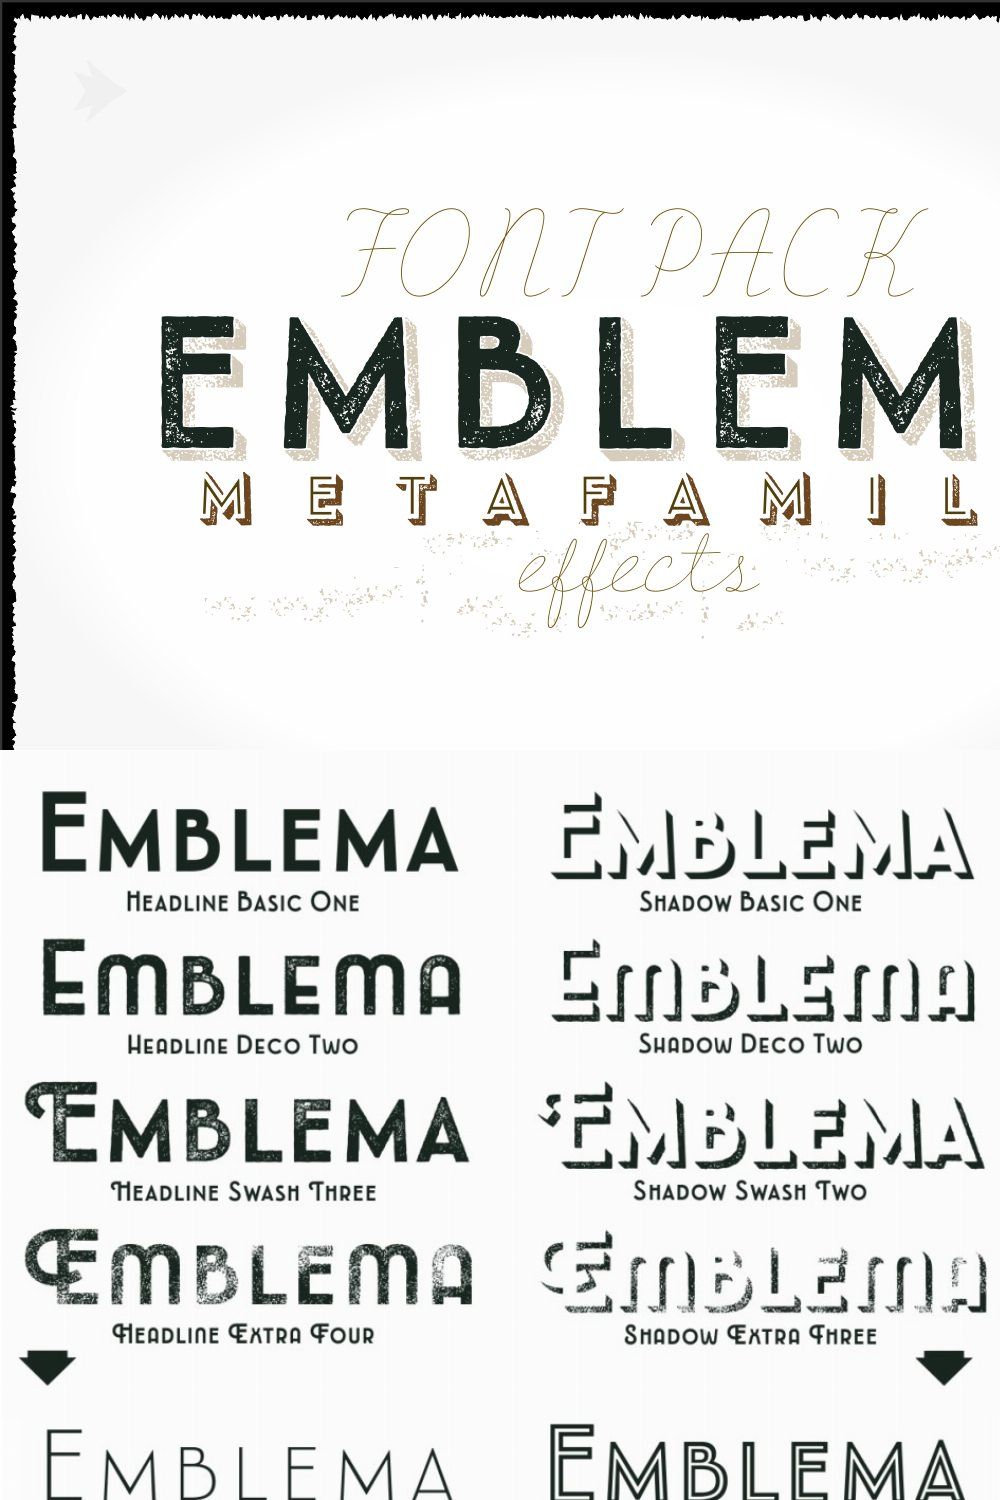 Emblema Metafamily pinterest preview image.